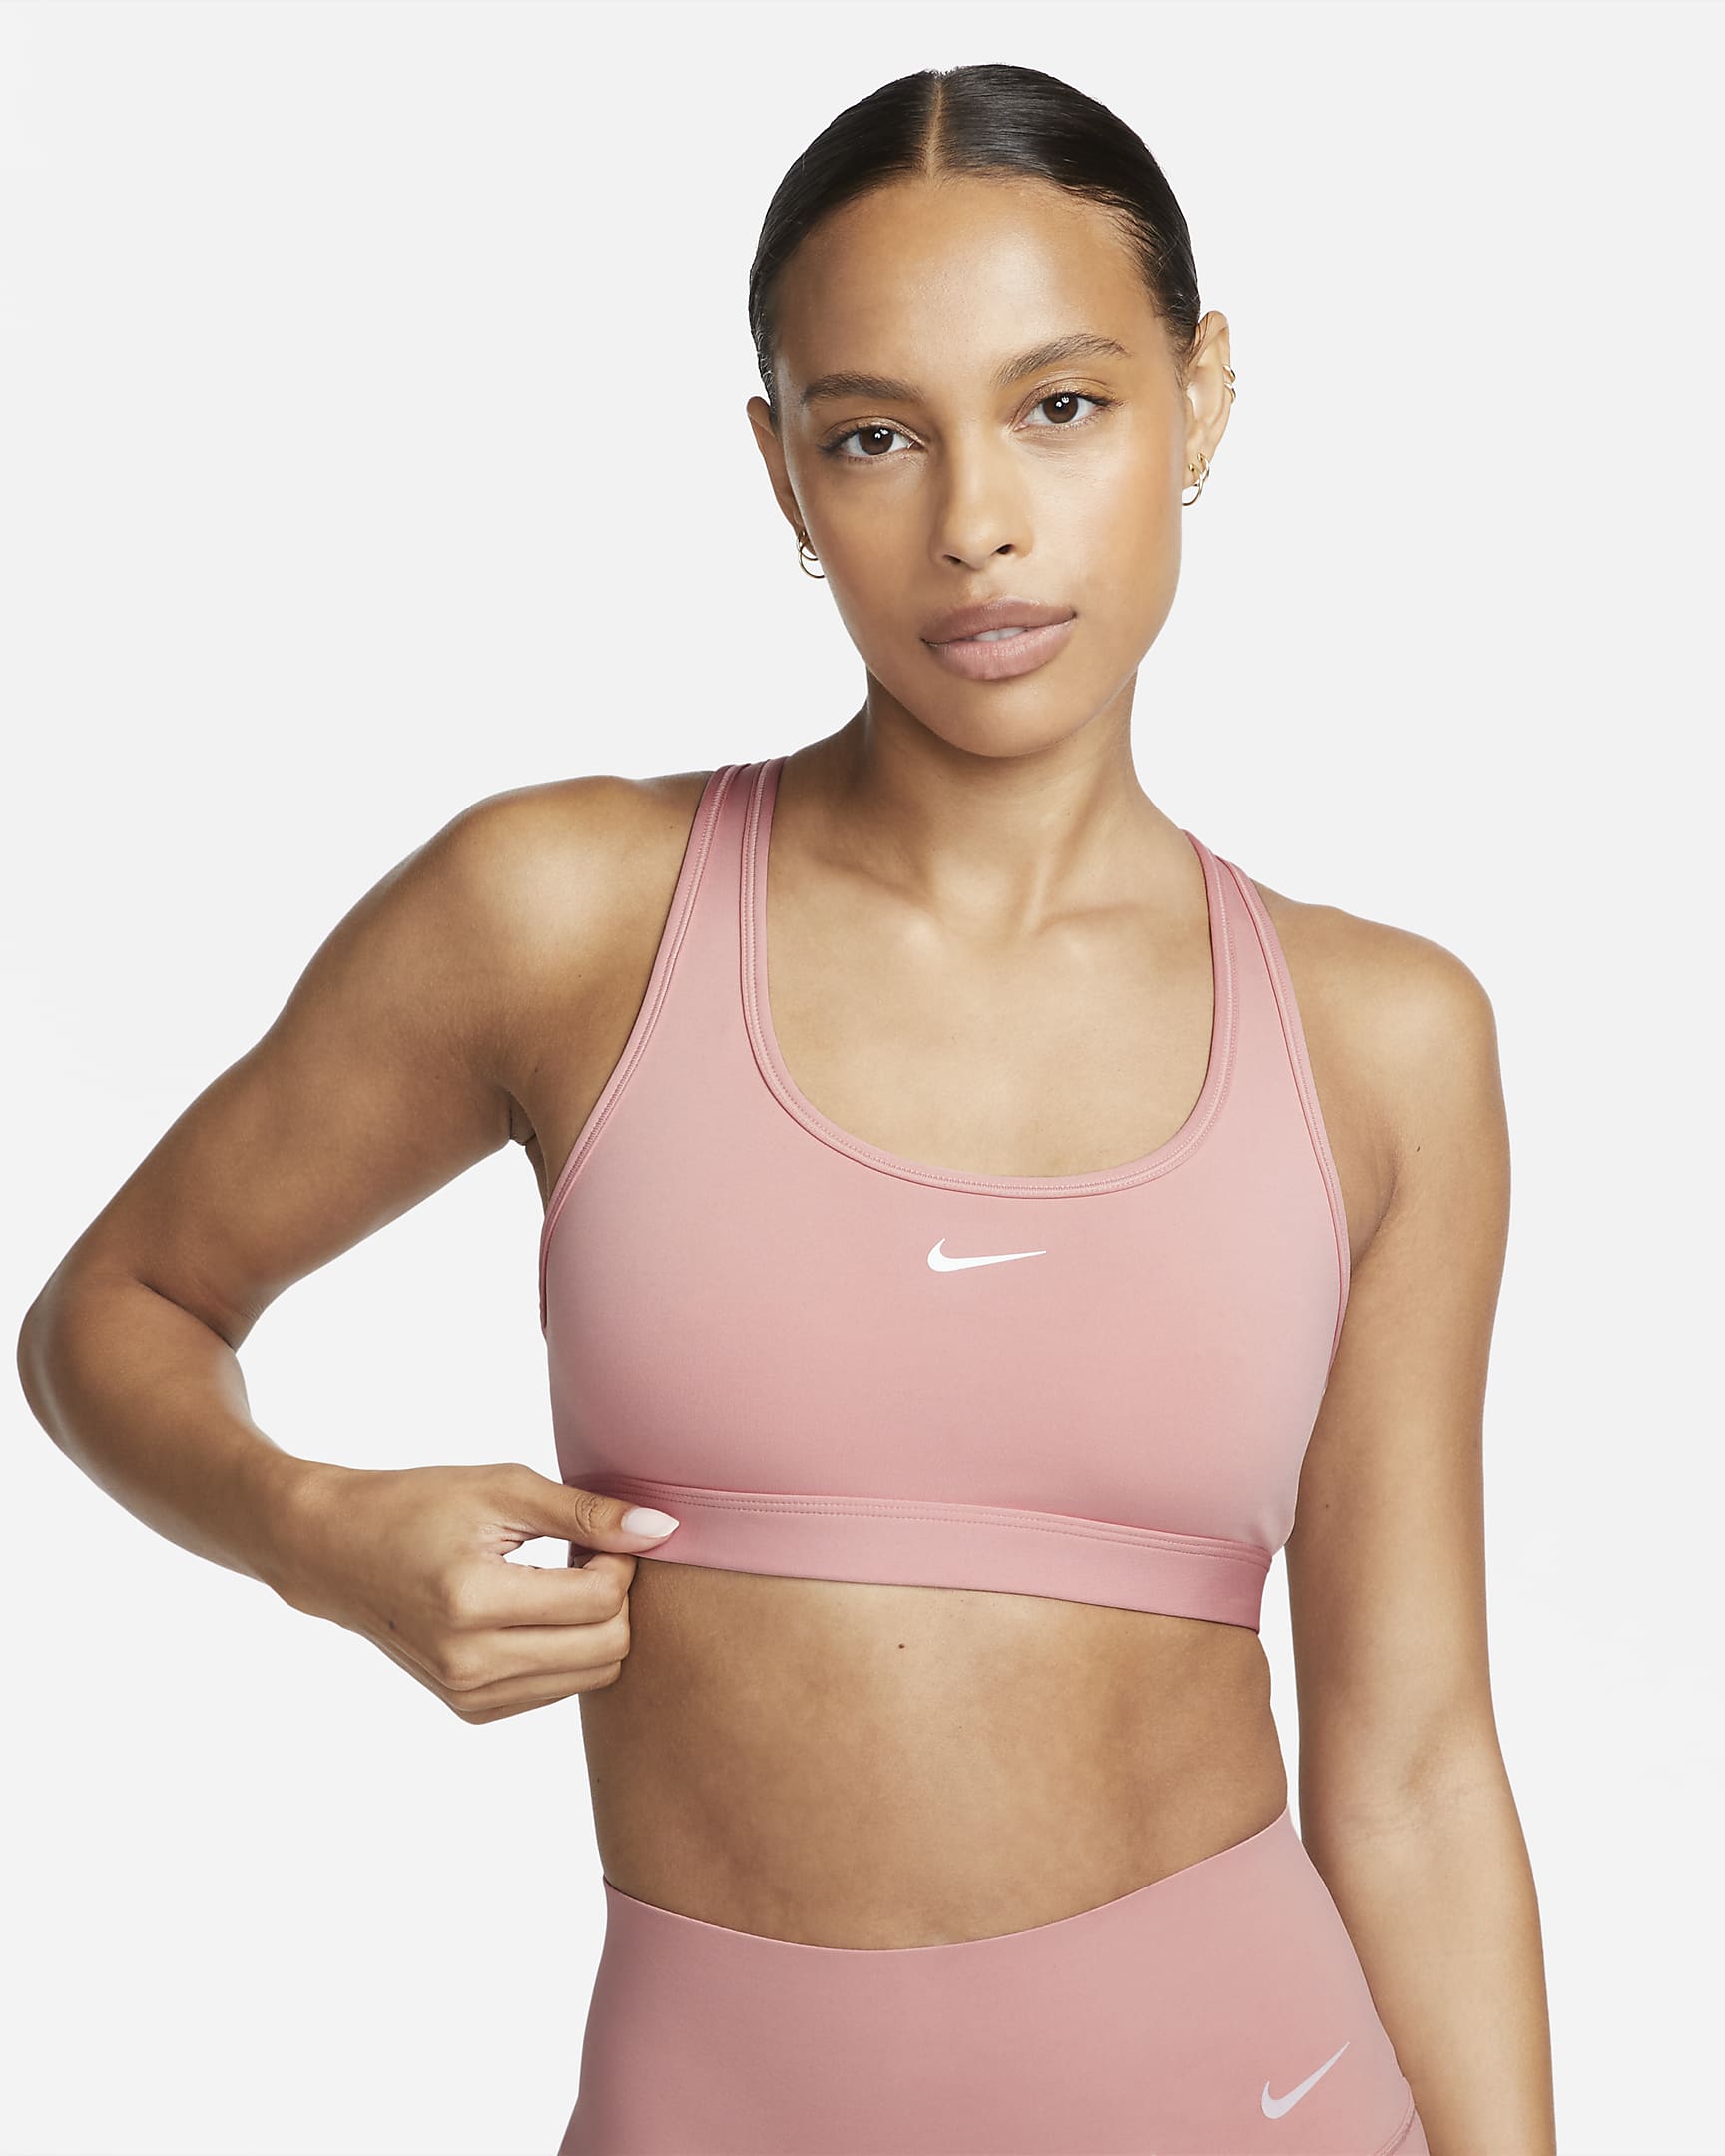 Nike Pink Light Support Reversible Sports Bra Woman’s Size XS NEW